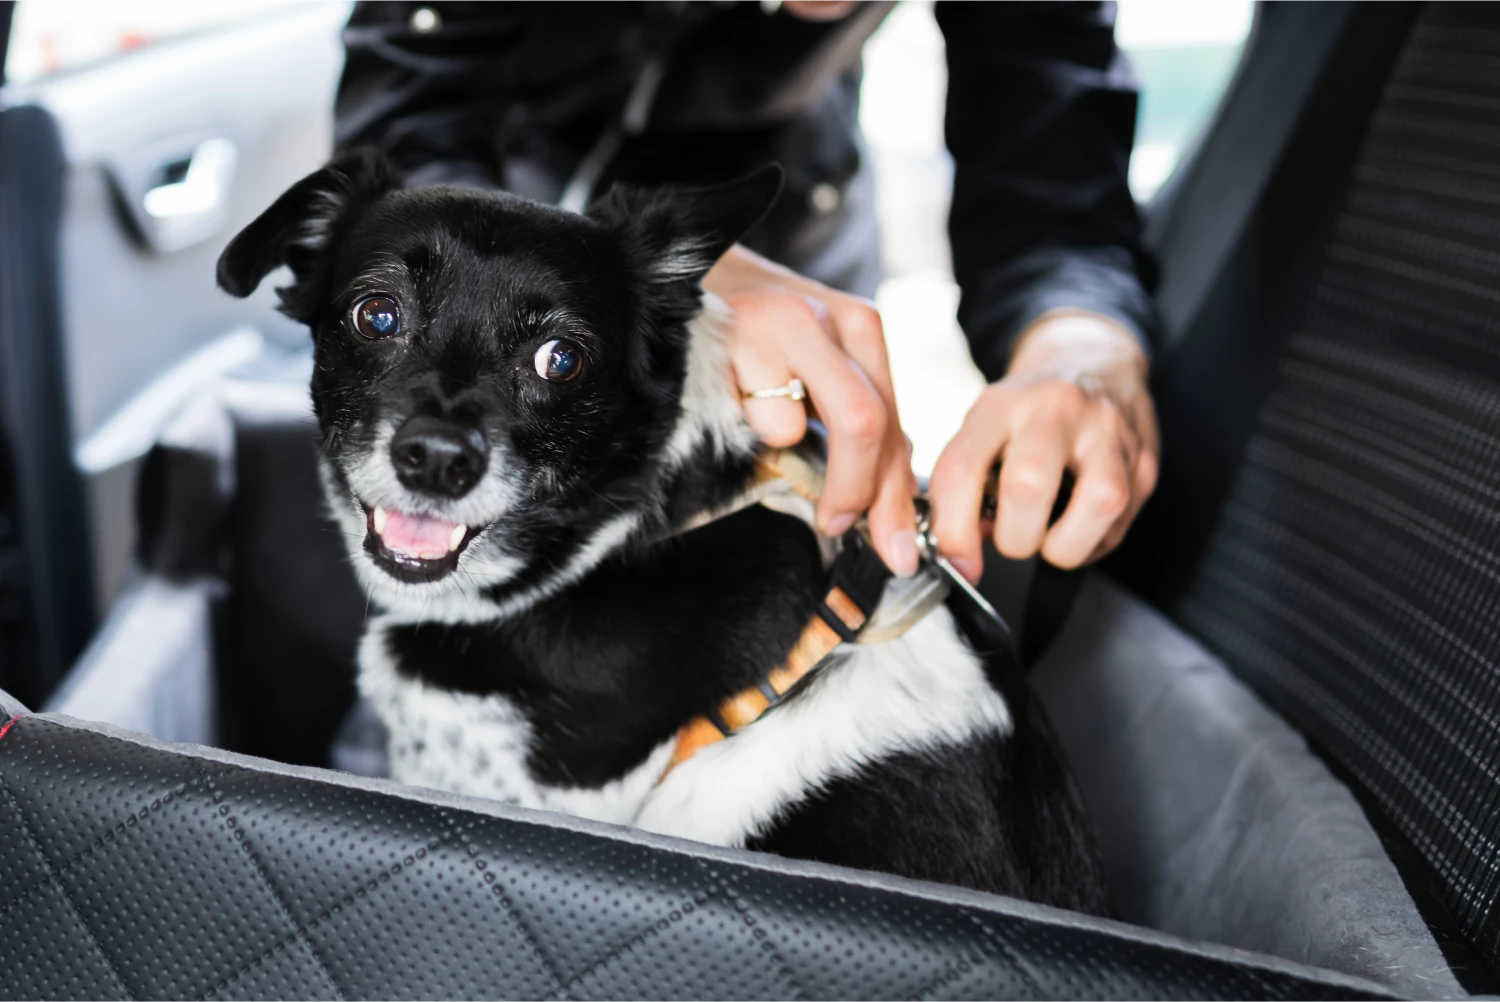 Ford EcoSport Dog Car Seat Belt for Weimaraners